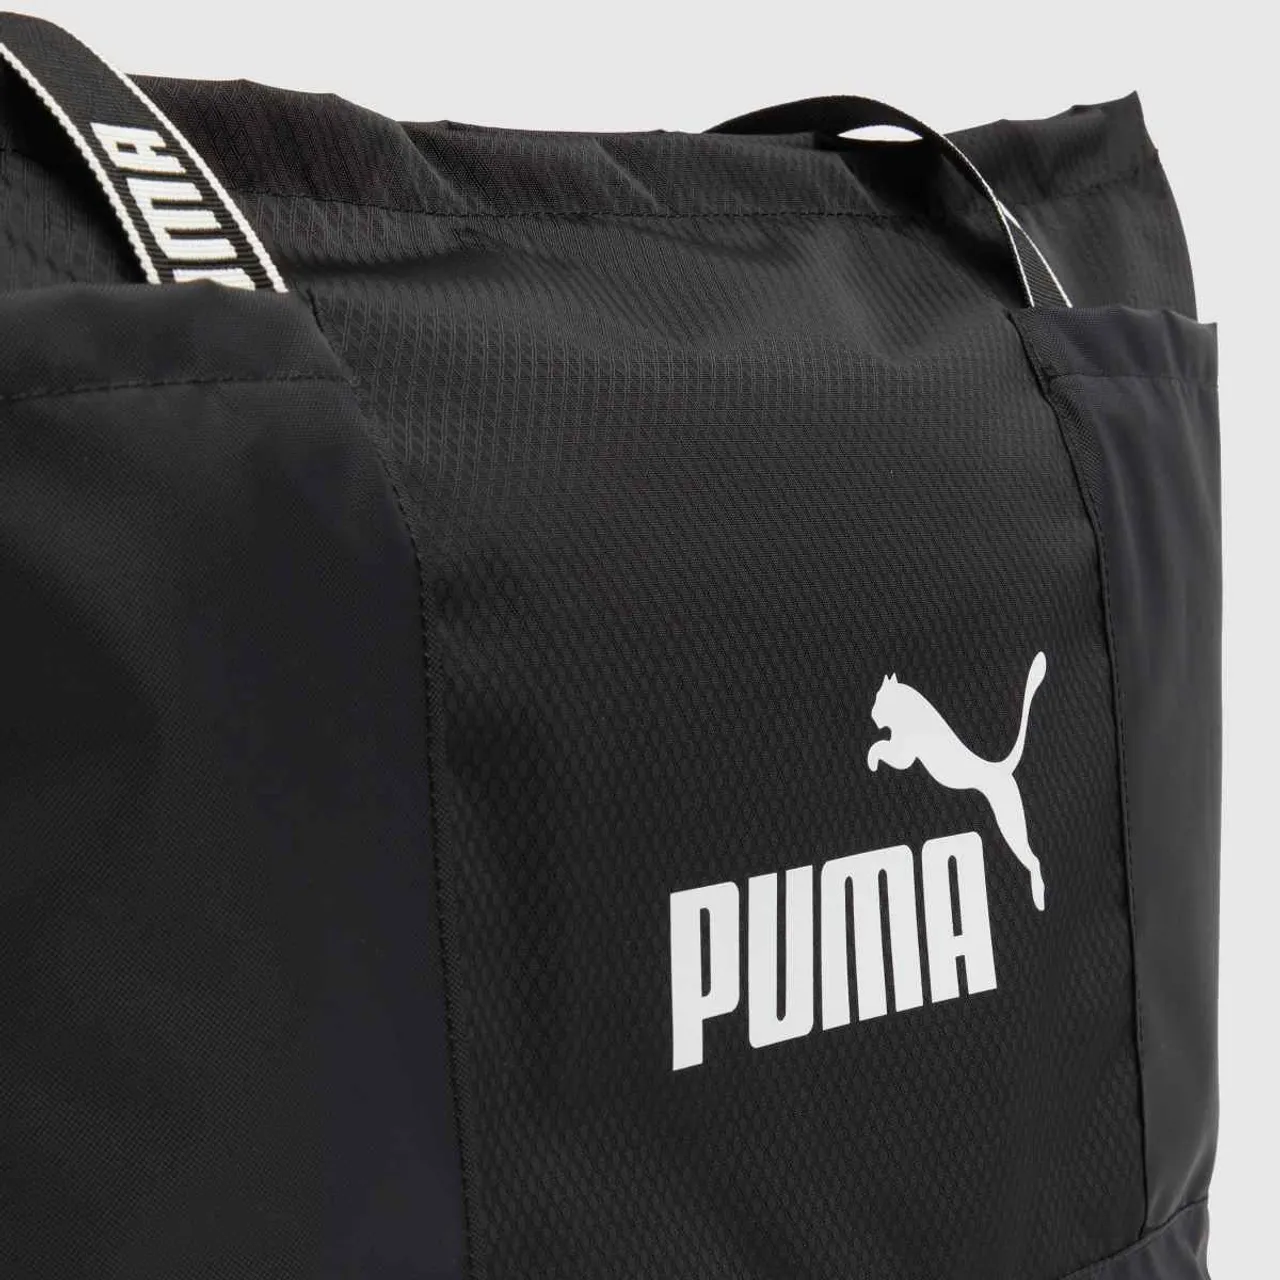 Puma Black and White Large Tote Bag